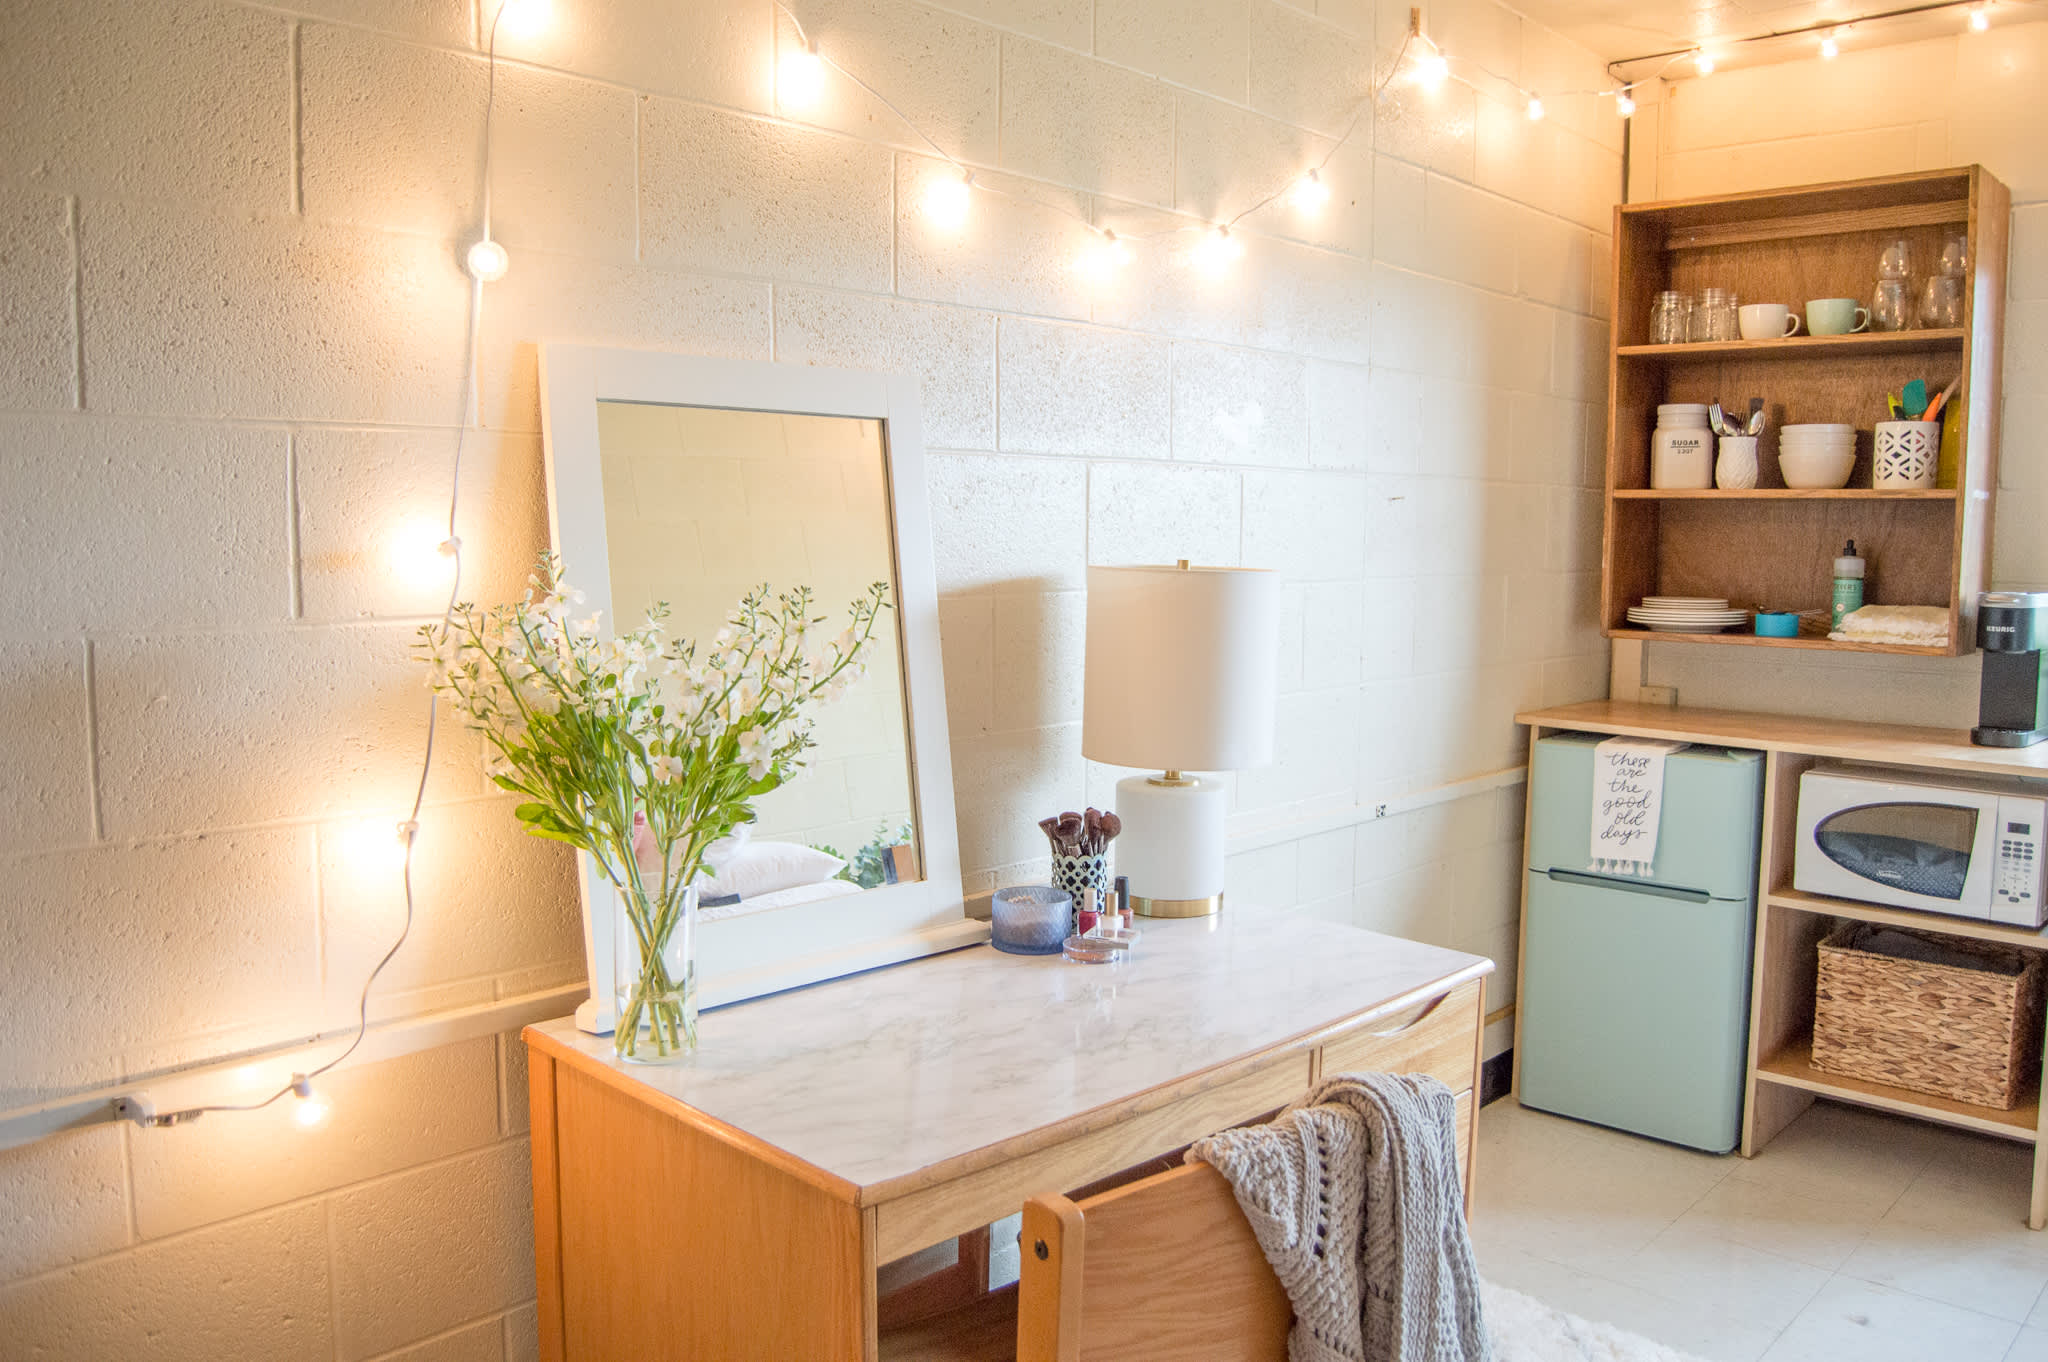 13 Genius Dorm Kitchen Ideas with Mini Fridge and Microwave  Tiny house  organization, College dorm room decor, Dorm kitchen